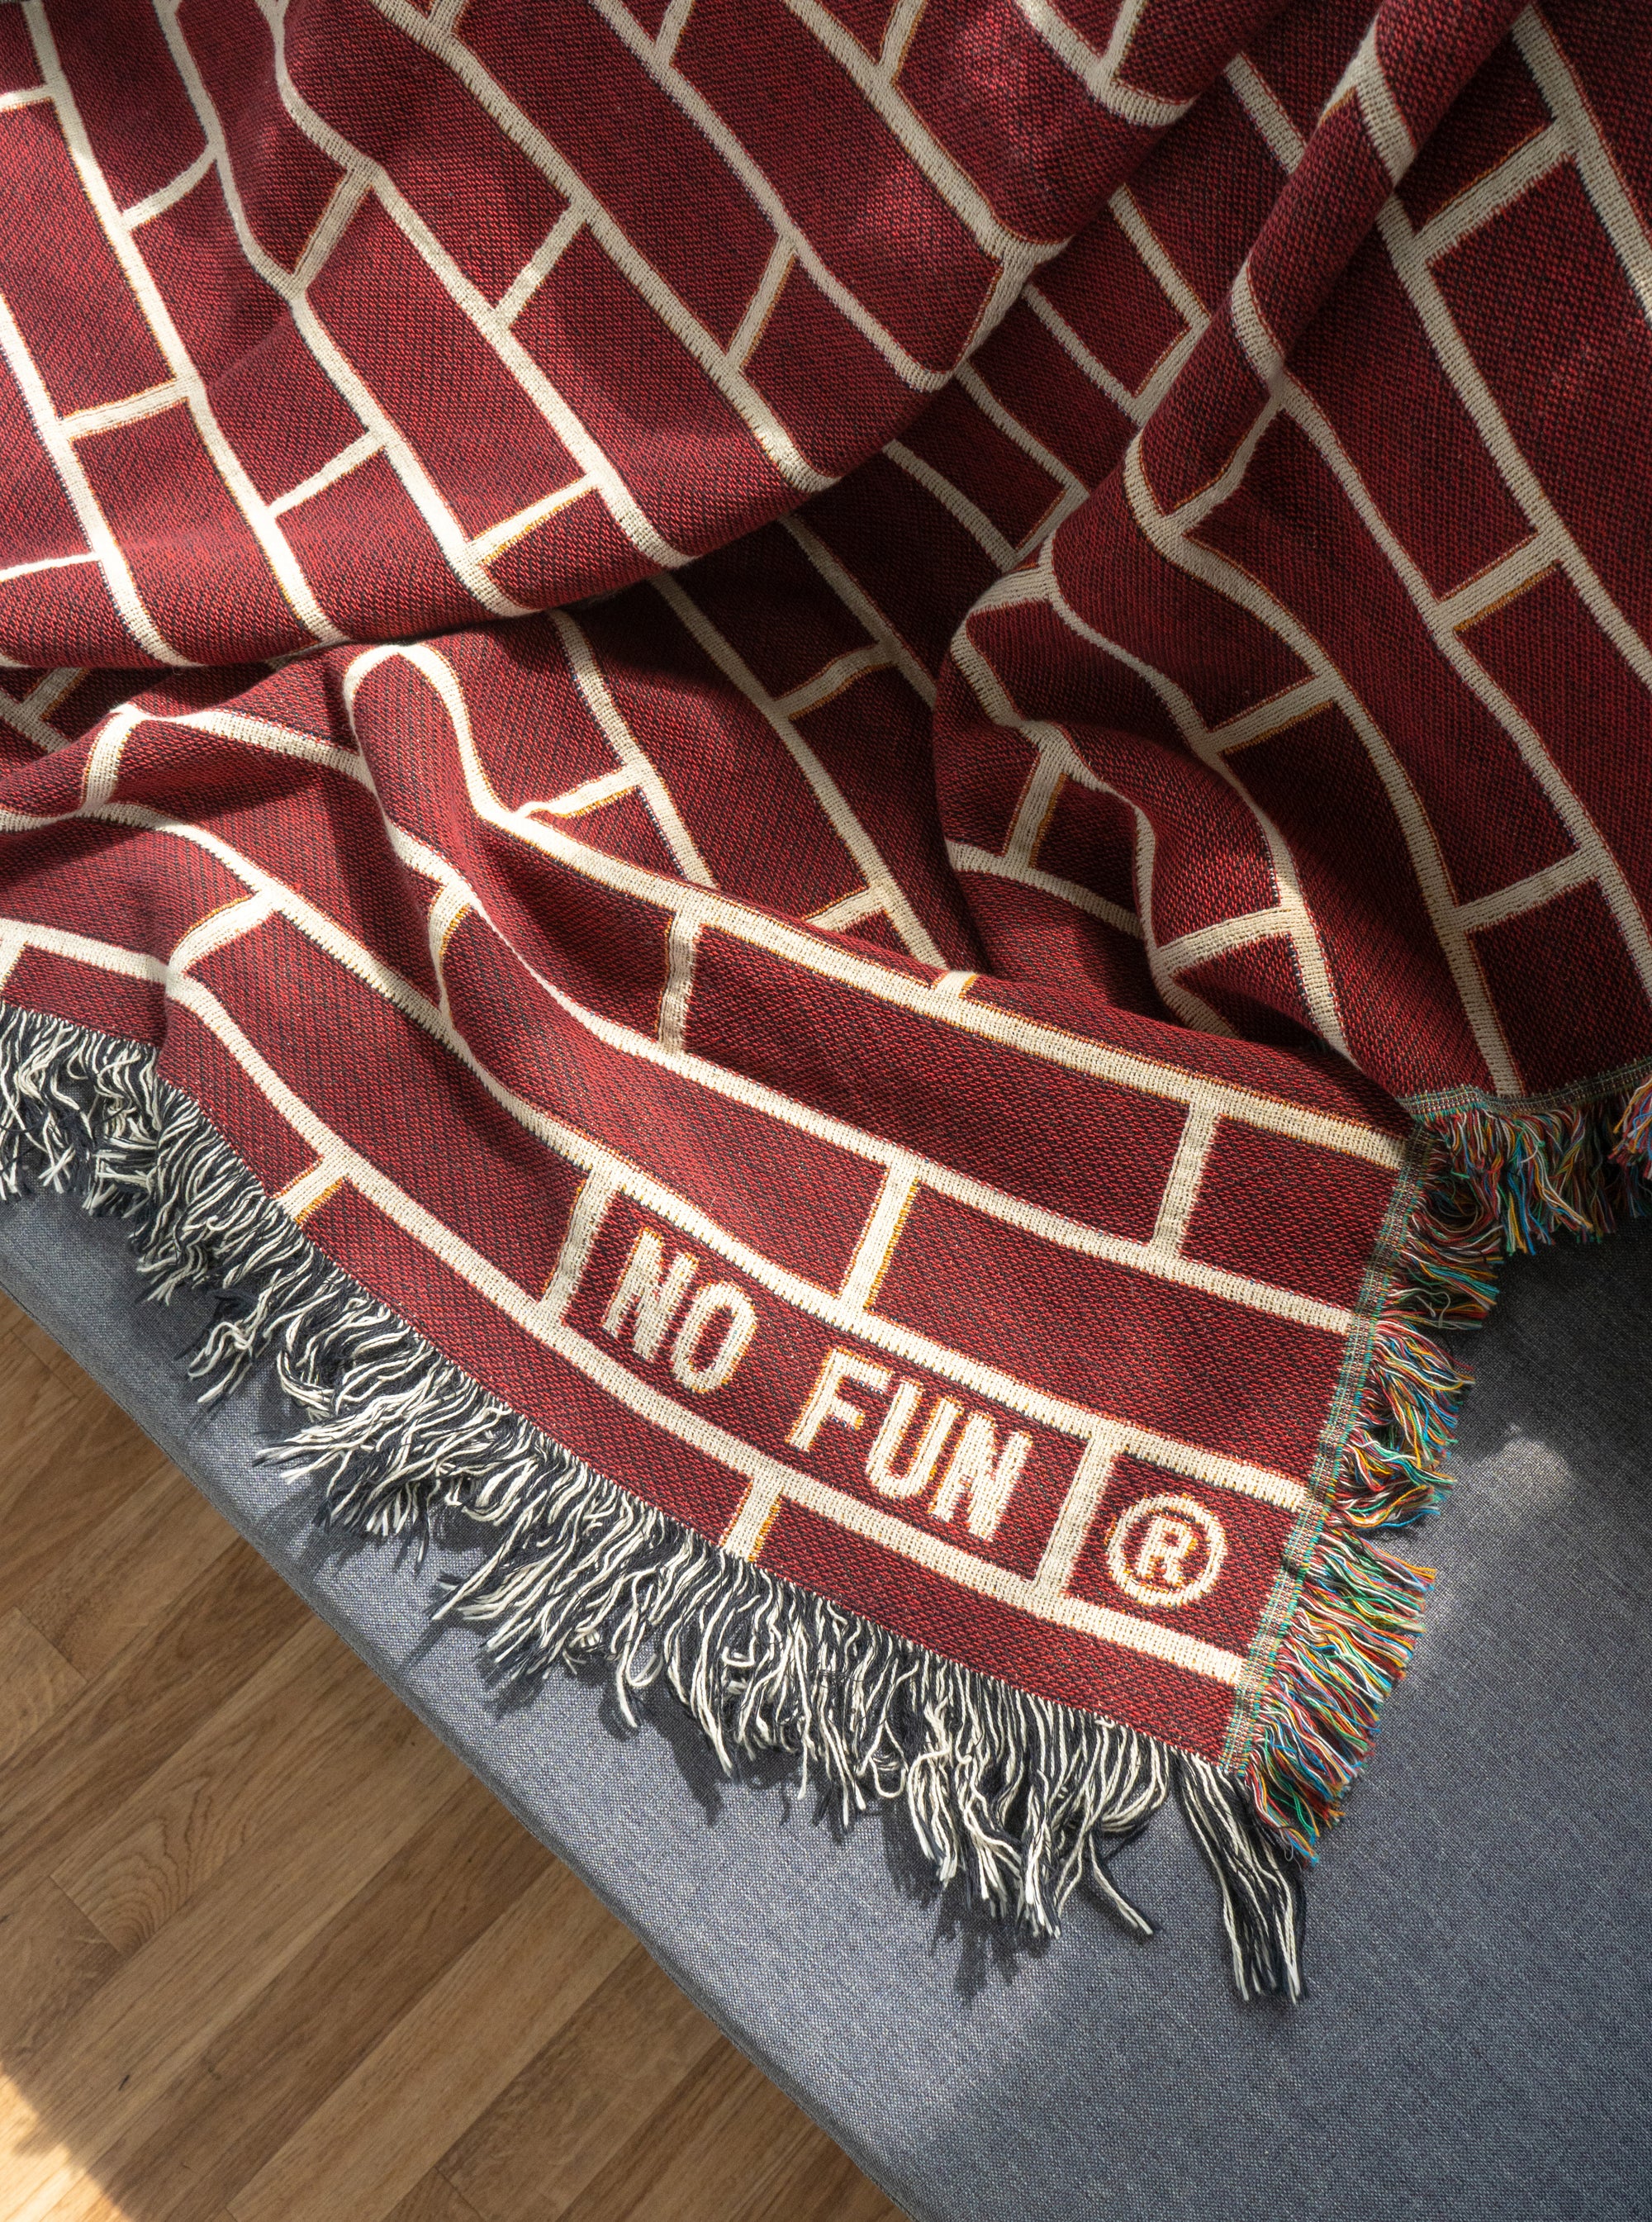 Brick Woven Blanket - No Fun®